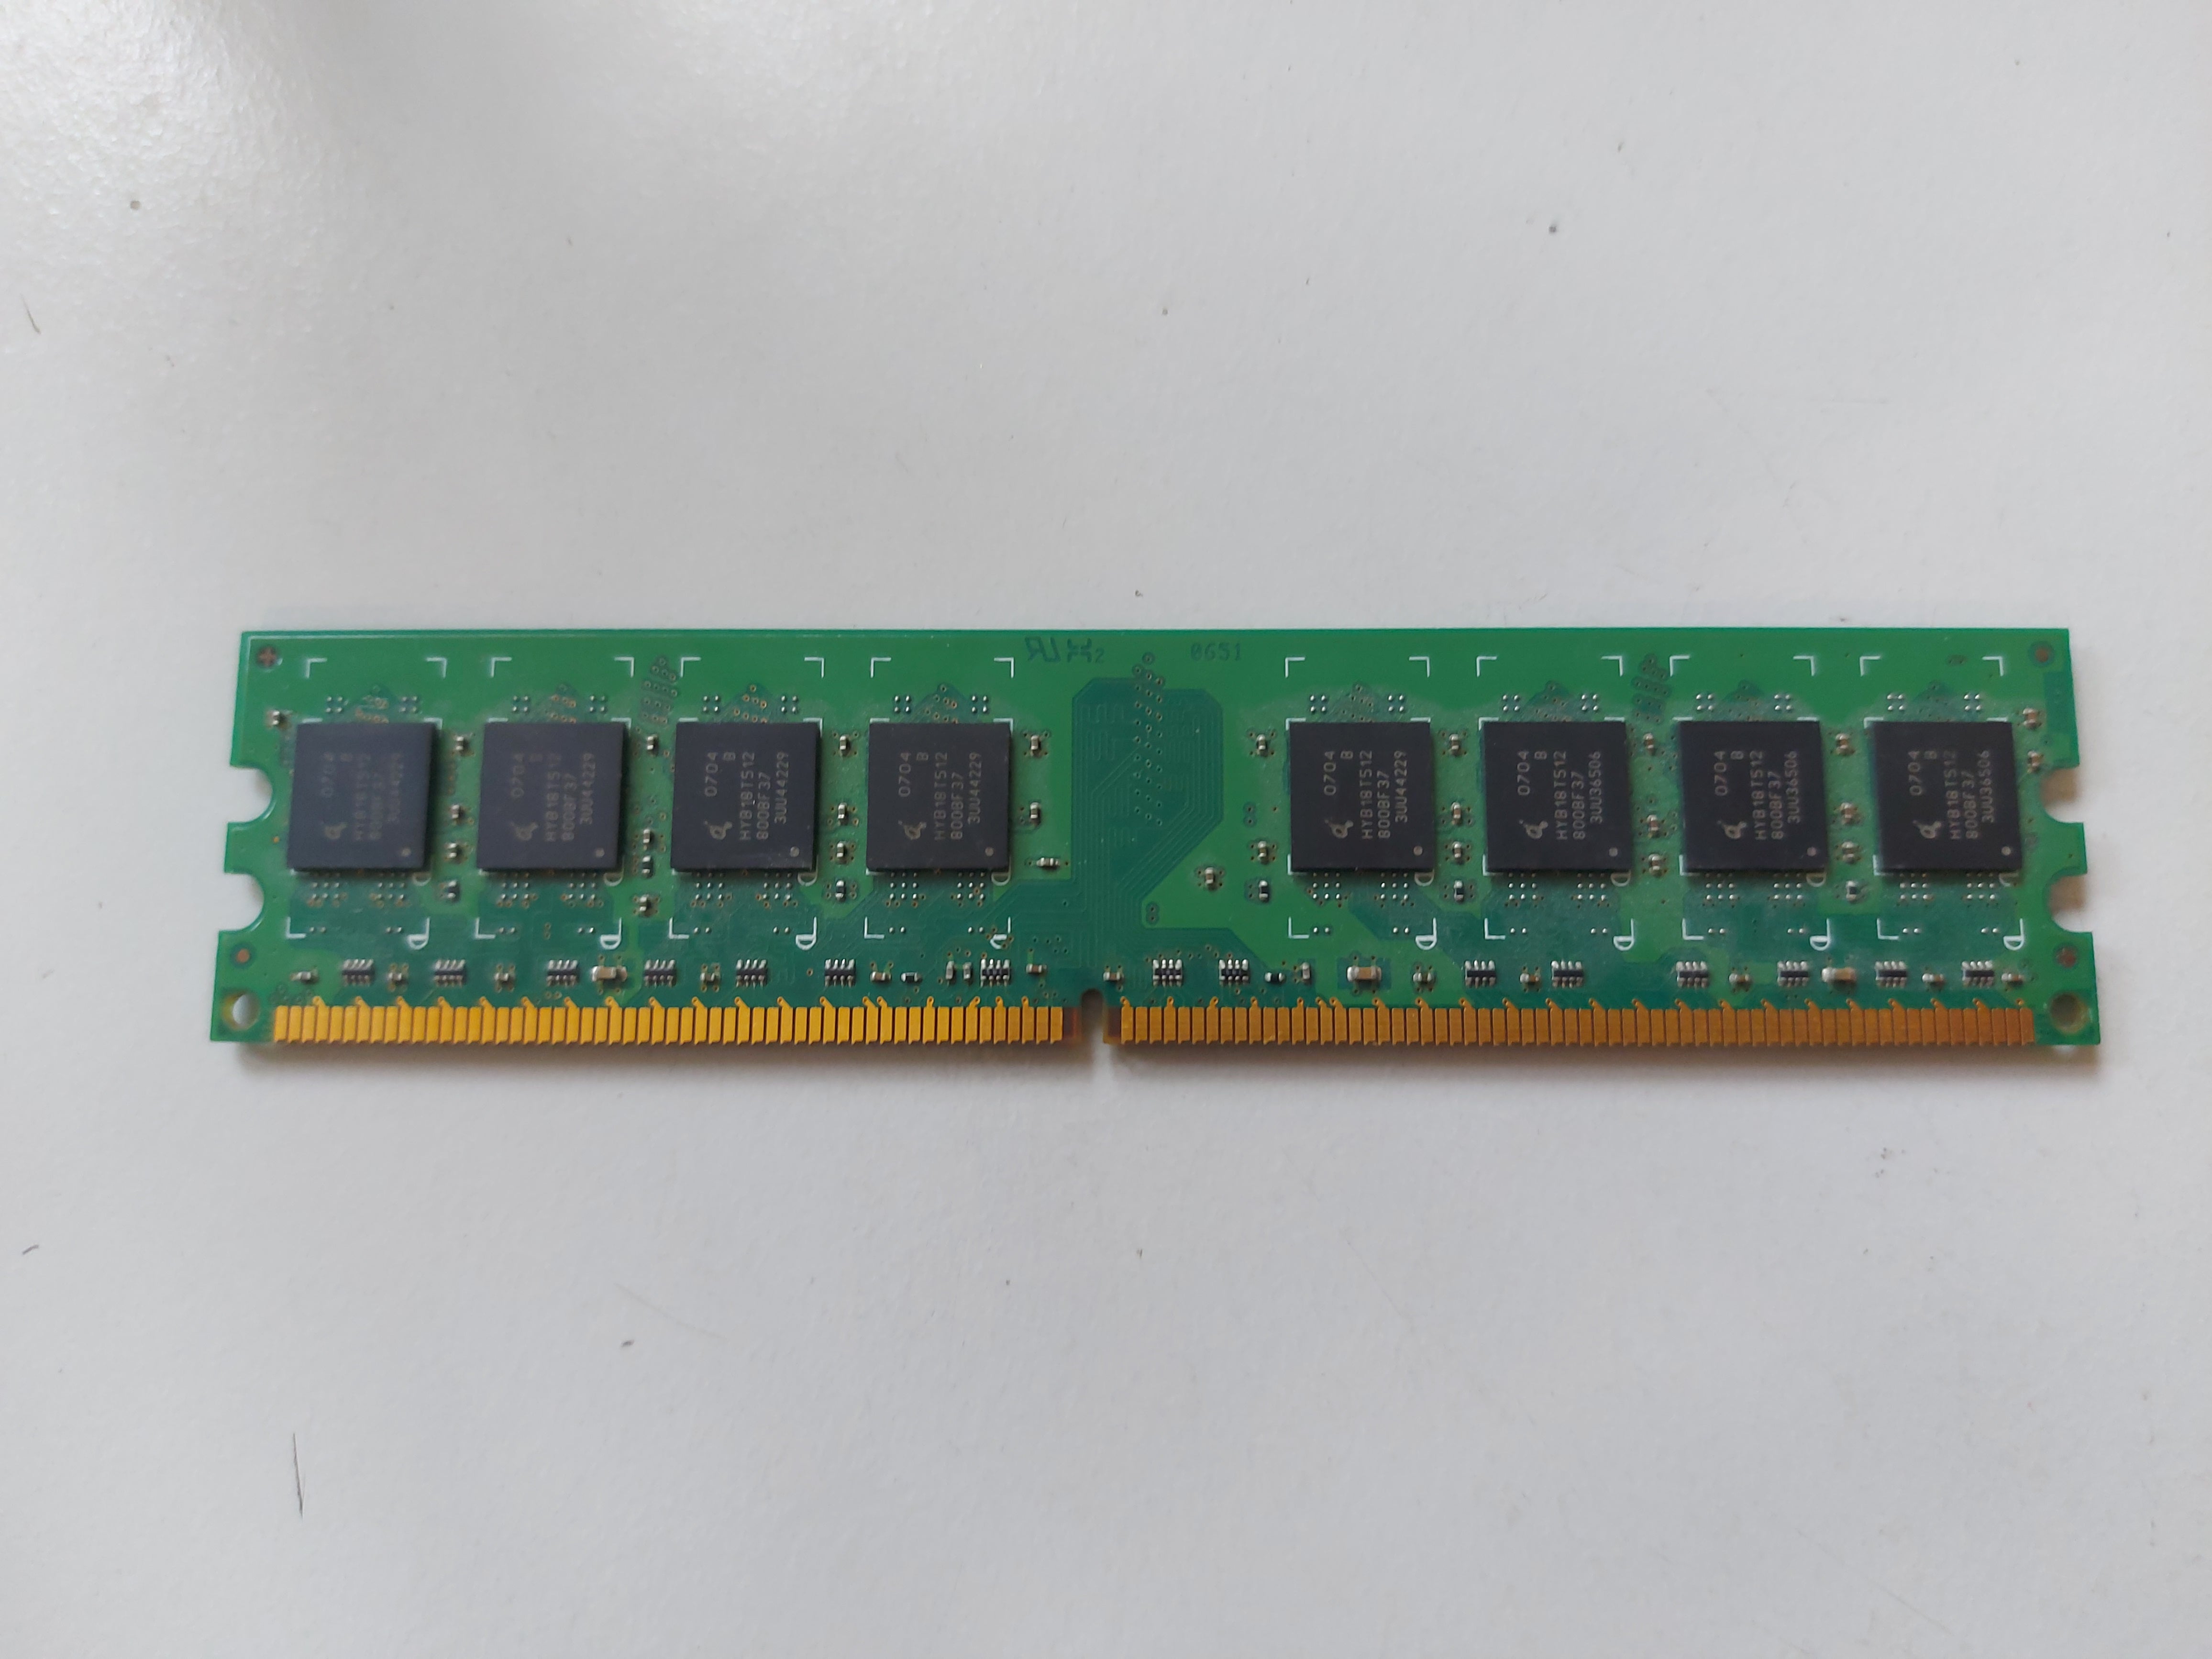 Qimonda 1GB PC2-4200 DDR2 NonECC 240Pin CL4 SDRAM DIMM ( HYS64T128020HU-3.7-B ) REF